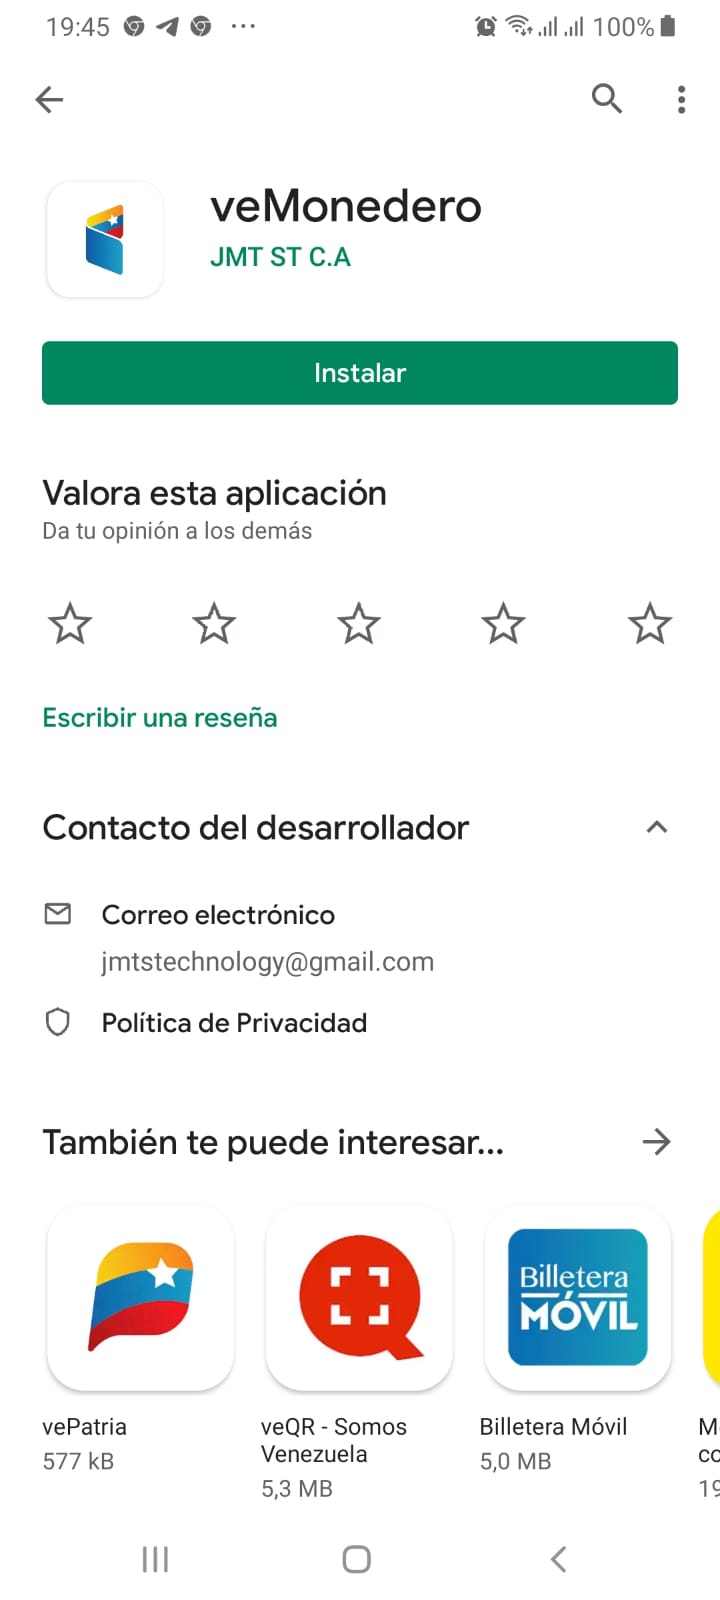 Paso1. BVeMonedero petrosusca en Play Store la App de veMonedero e instálala en tu teléfono